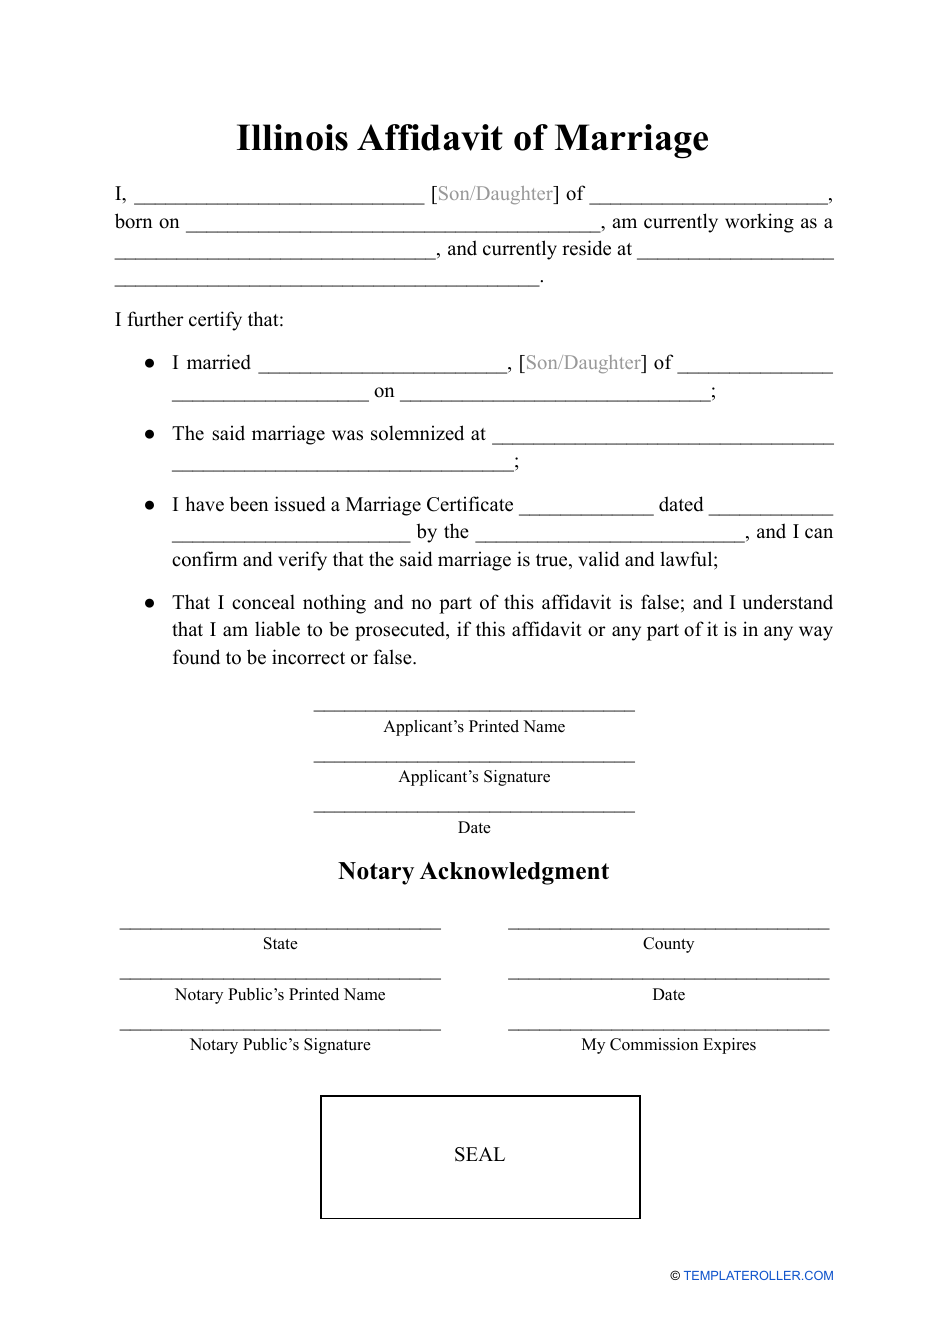 Affidavit of Marriage - Illinois, Page 1